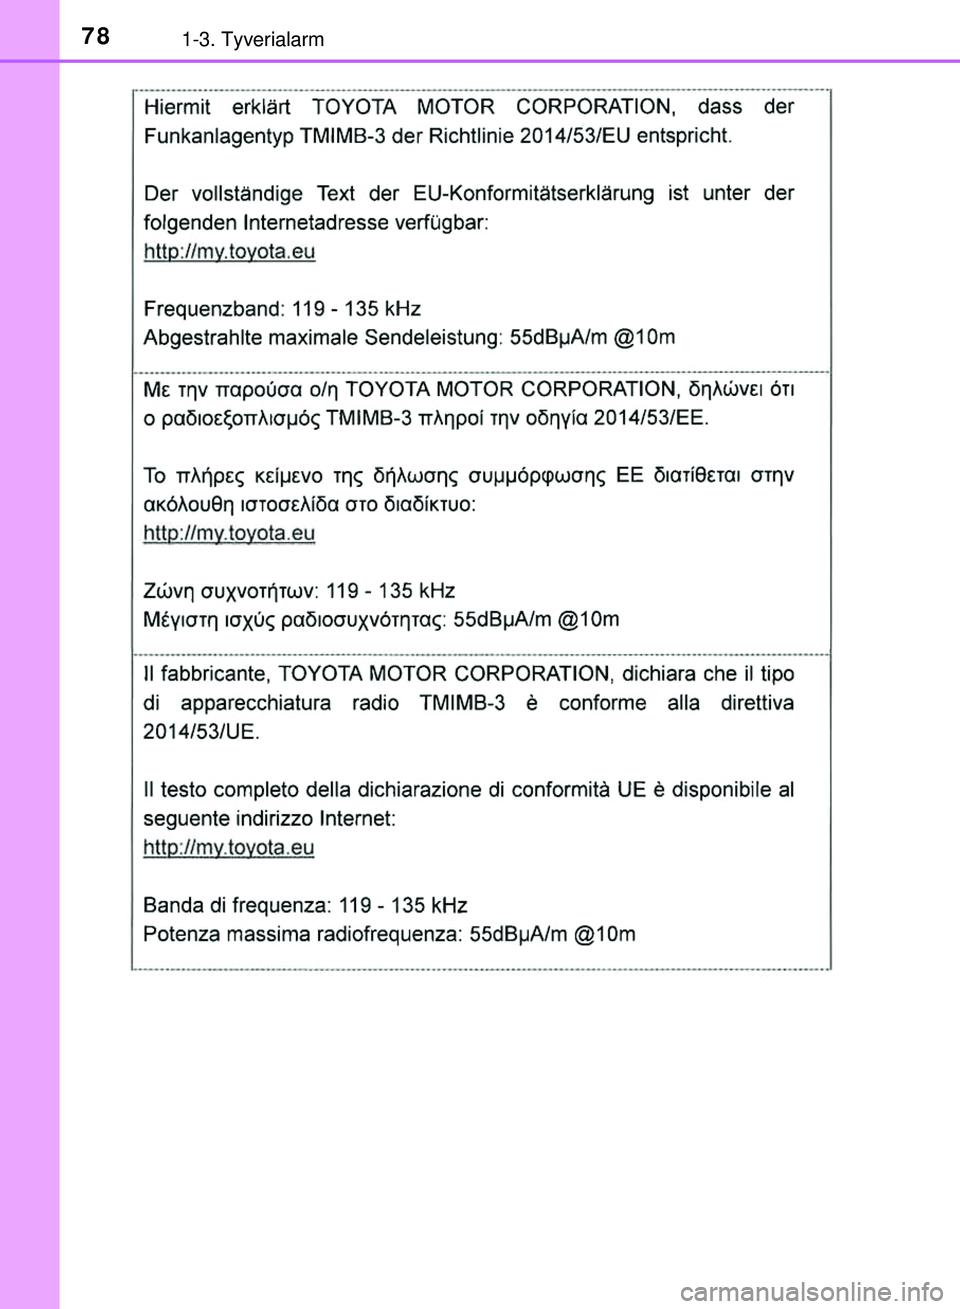 TOYOTA PRIUS PLUG-IN HYBRID 2018  Brugsanvisning (in Danish) 781-3. Tyverialarm
OM47C99DK
OM47C99DK.book  Page 78  Friday, August 10, 2018  11:20 AM 